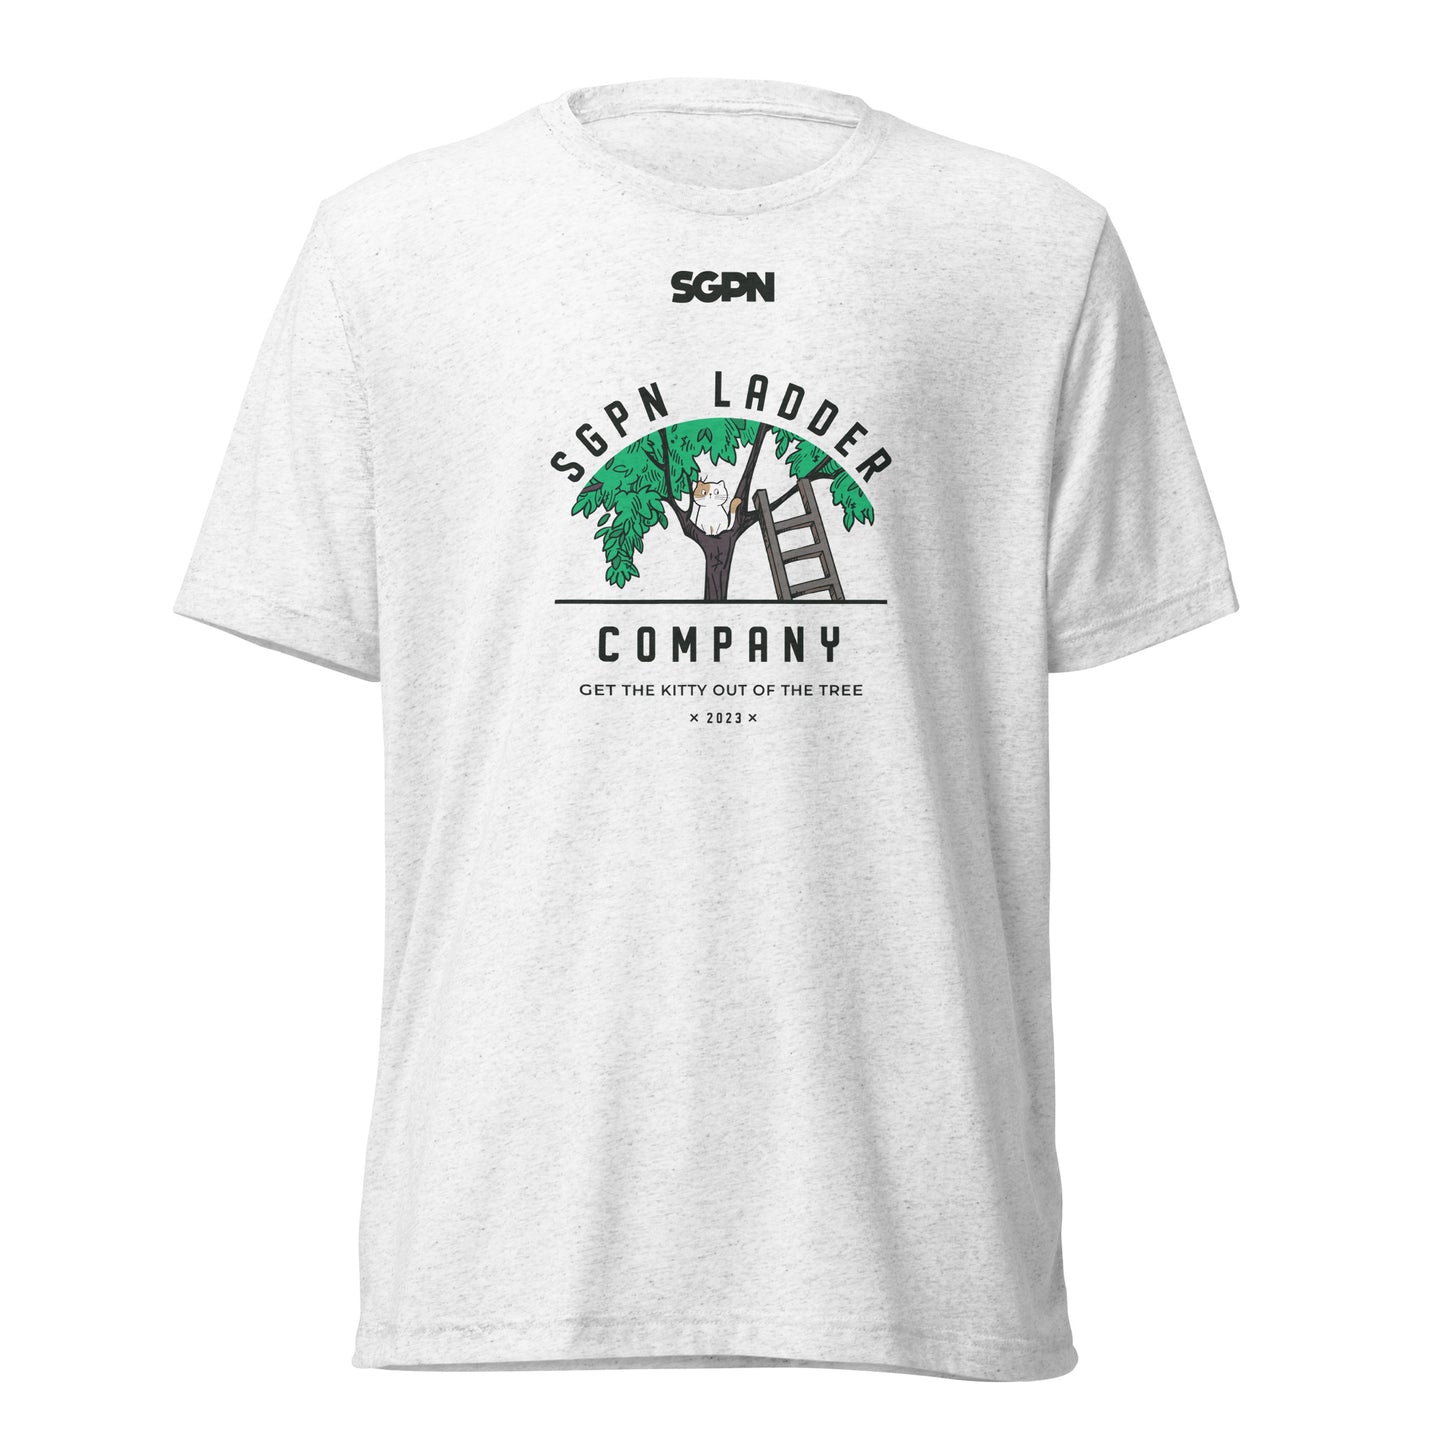 SGPN Ladder Company - Short sleeve t-shirt